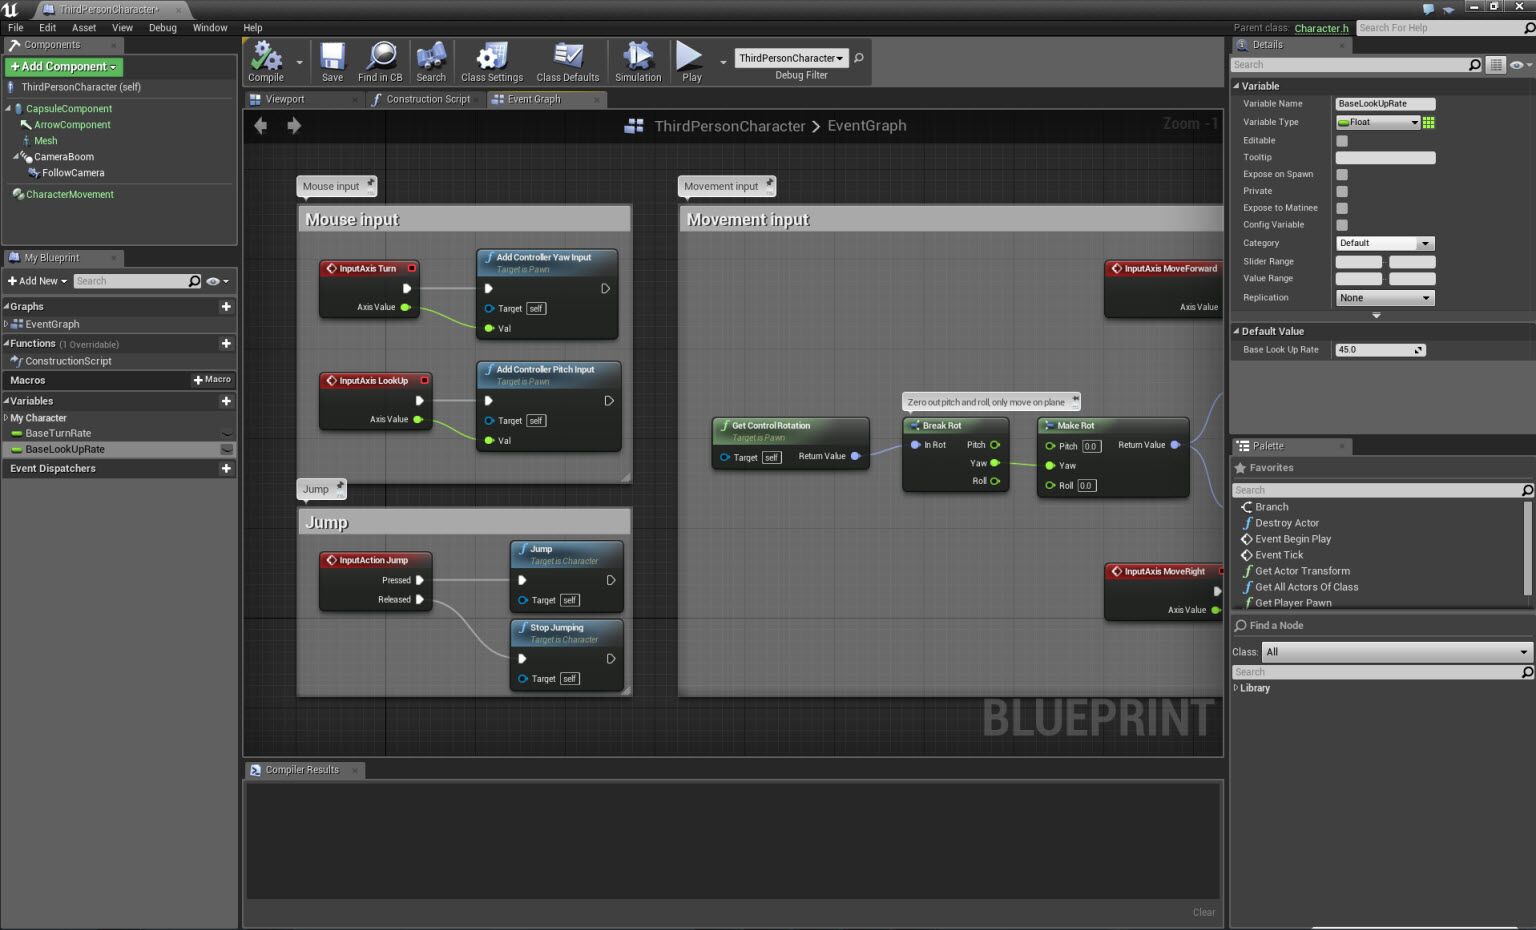 Blueprints in Unreal Engine